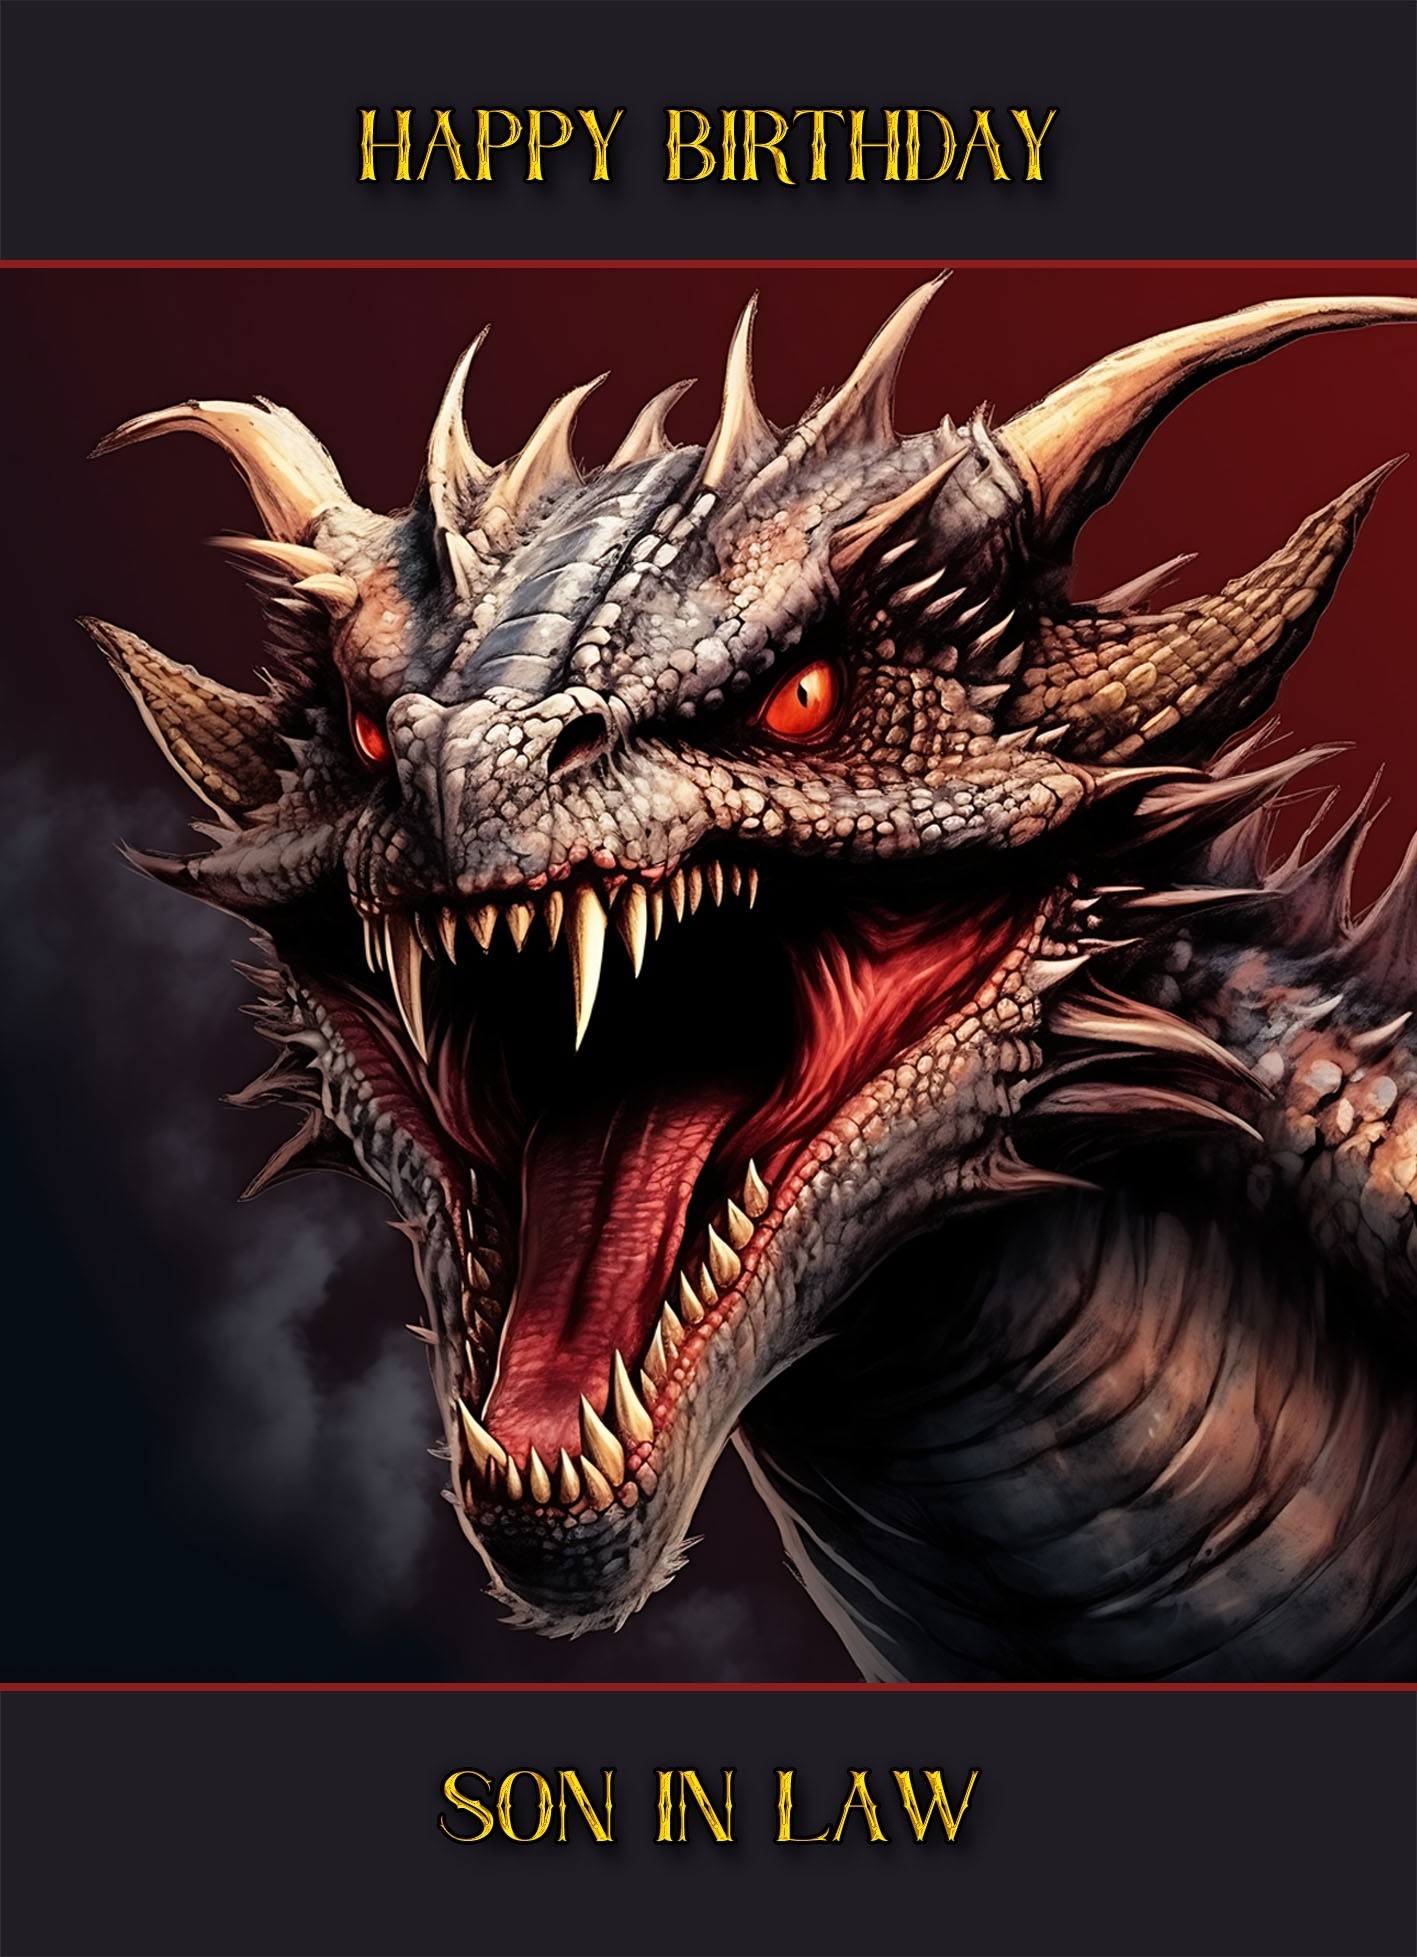 Gothic Fantasy Dragon Birthday Card For Son in Law (Design 2)